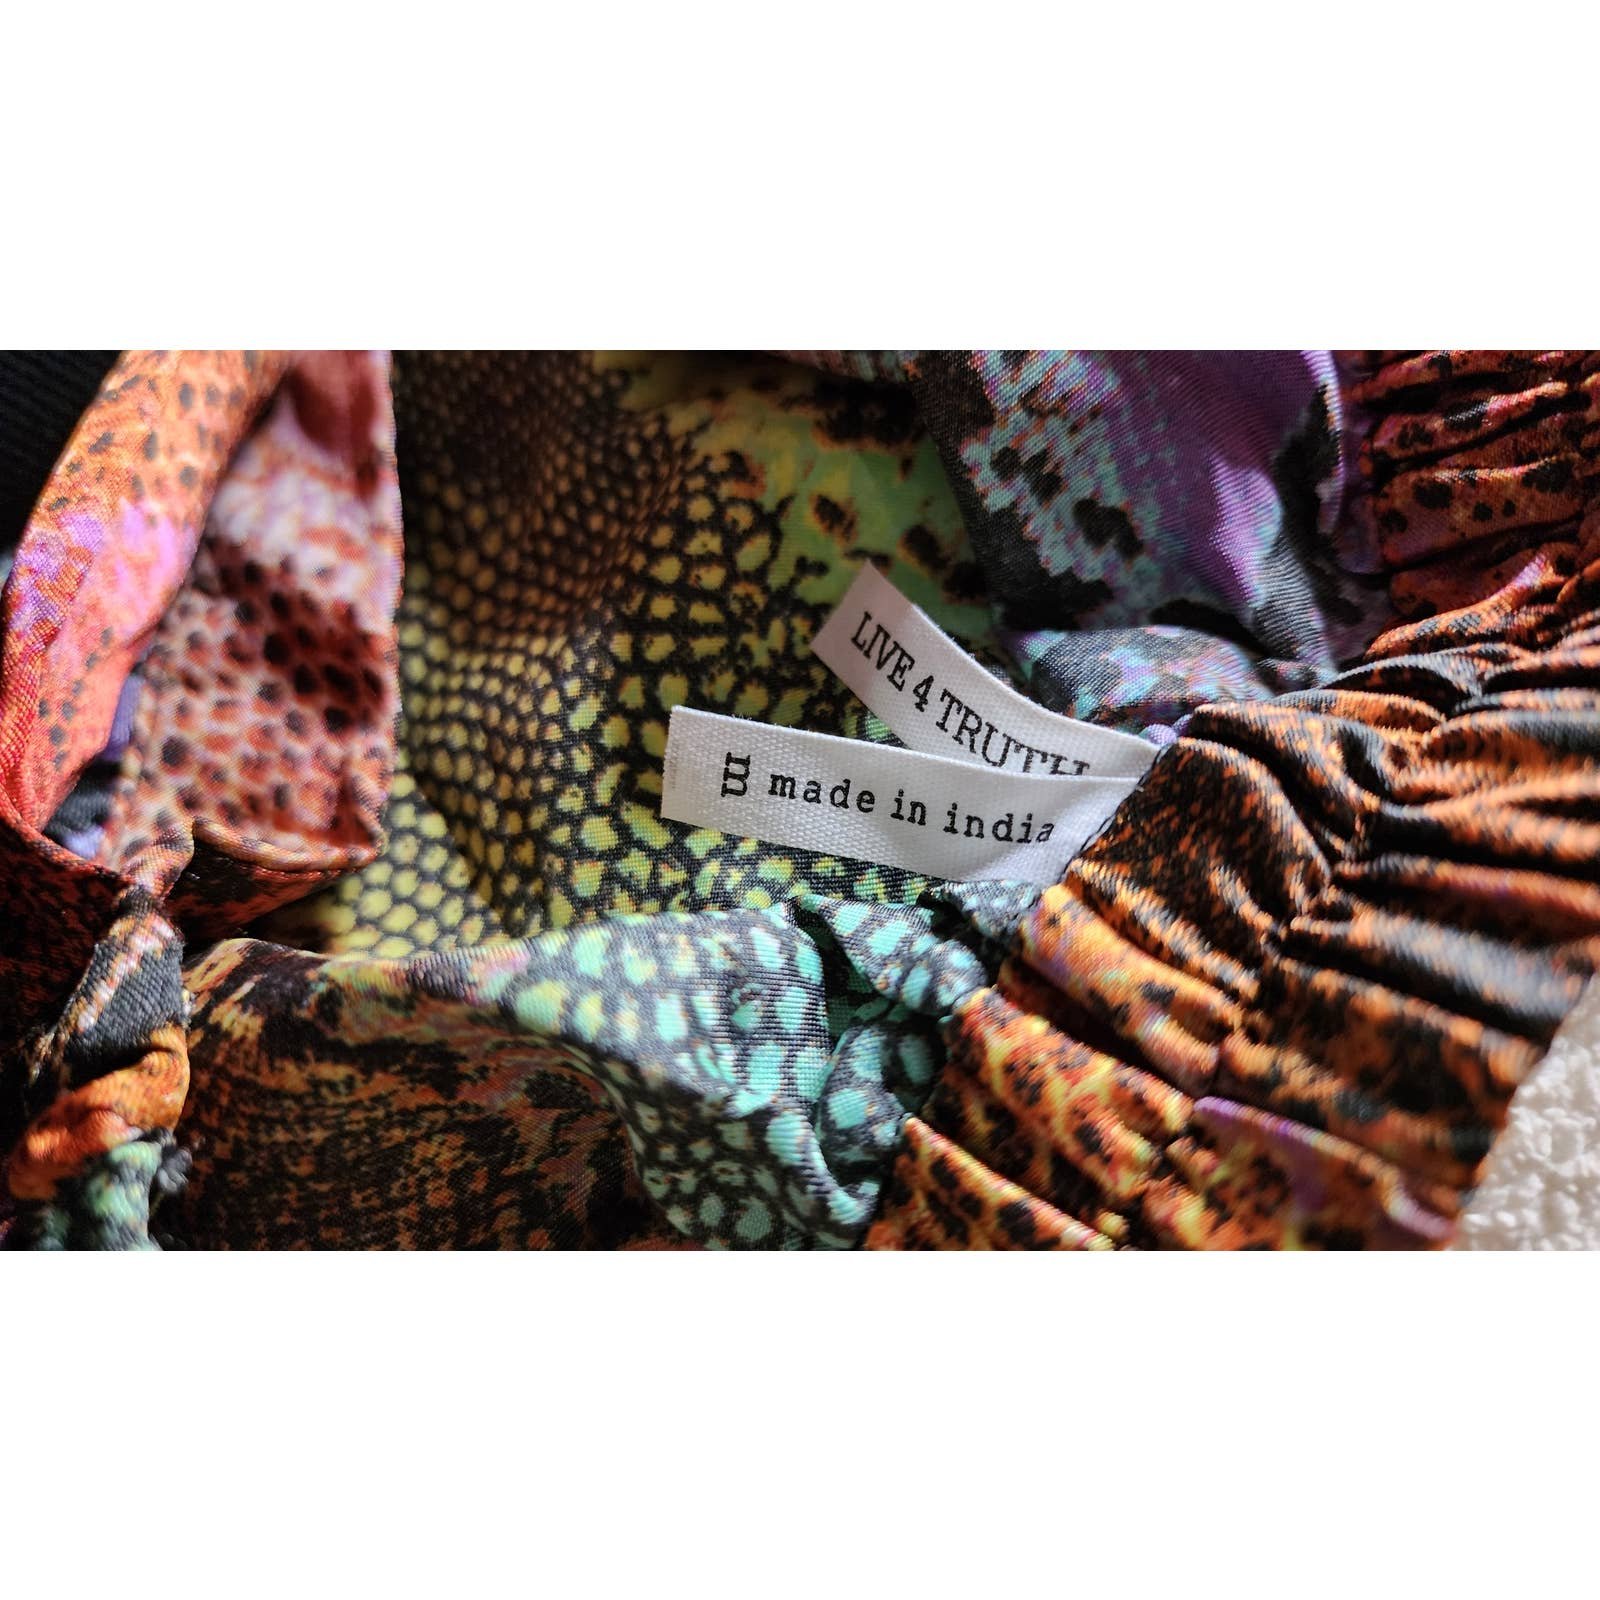 High quality Glam Rock Shiny Rainbow Snake Print Skirt Size Medium nekeRsjcd US Sale